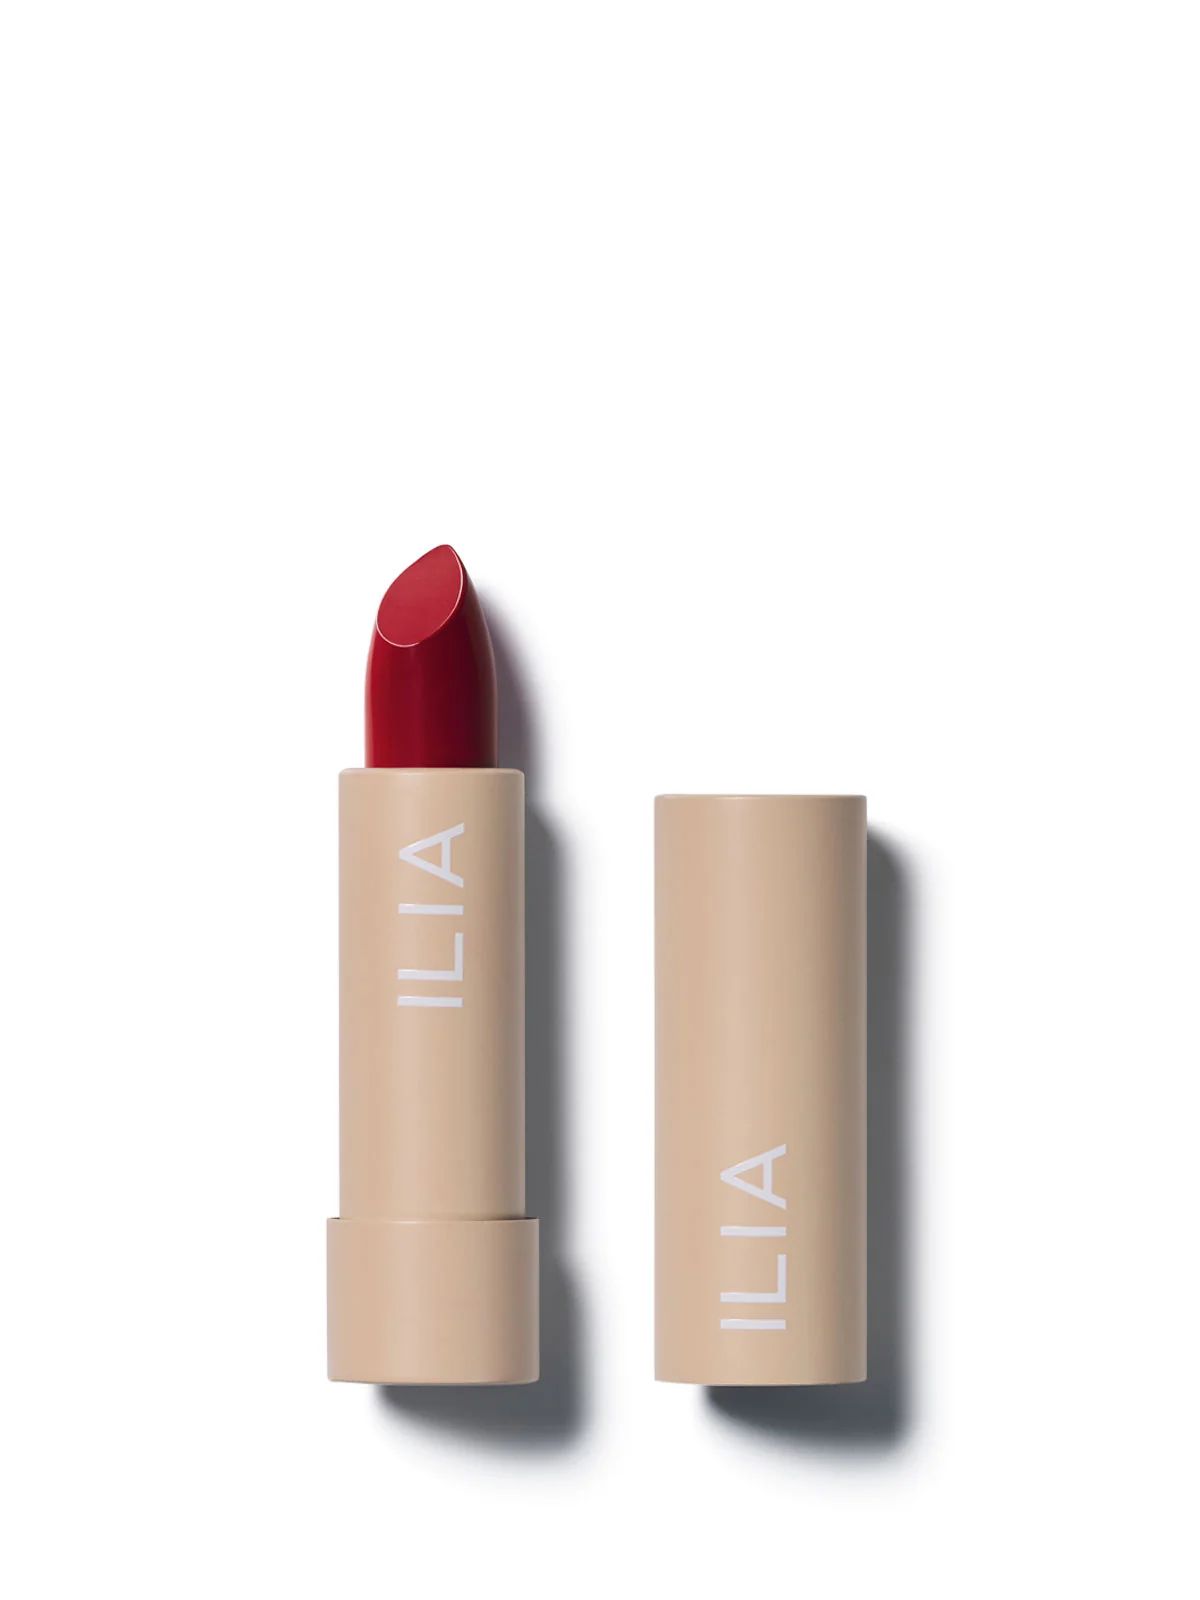 Lipstick Makeup: Real Red with Cool Undertones | ILIA Beauty | ILIA Beauty